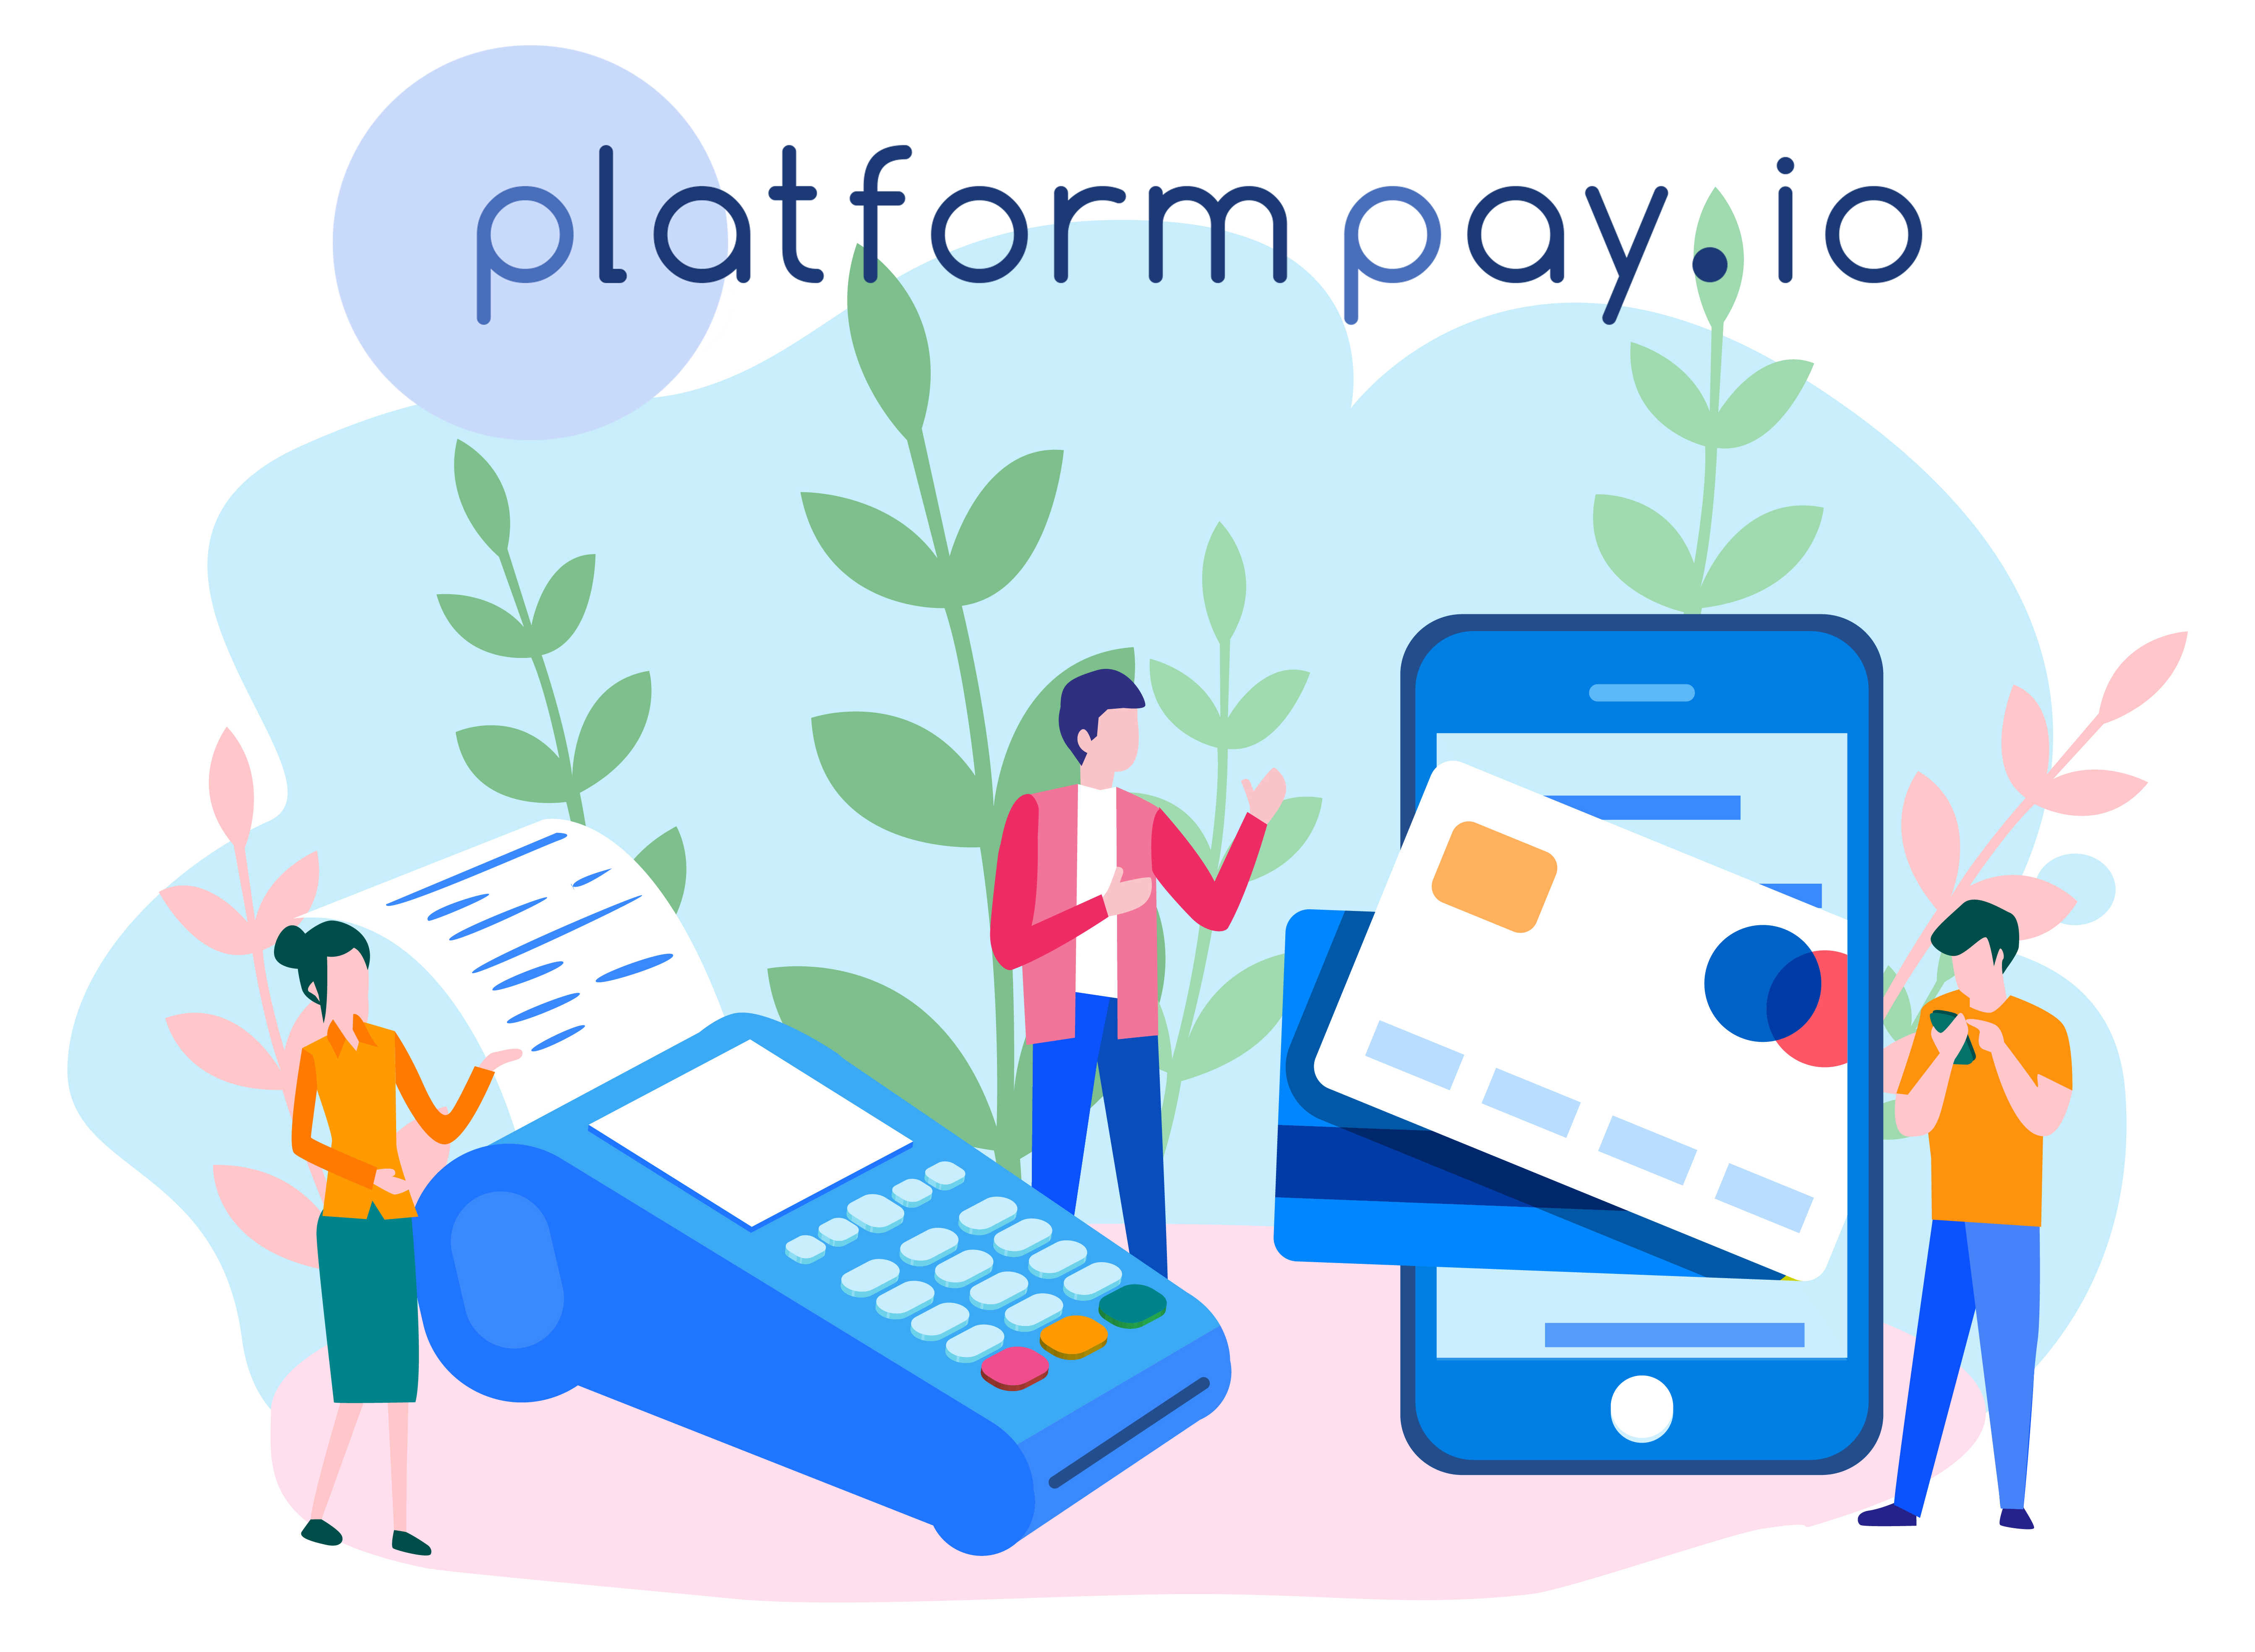 5 Ways PlatformPay.io is Revolutionizing the Merchant Processing Industry